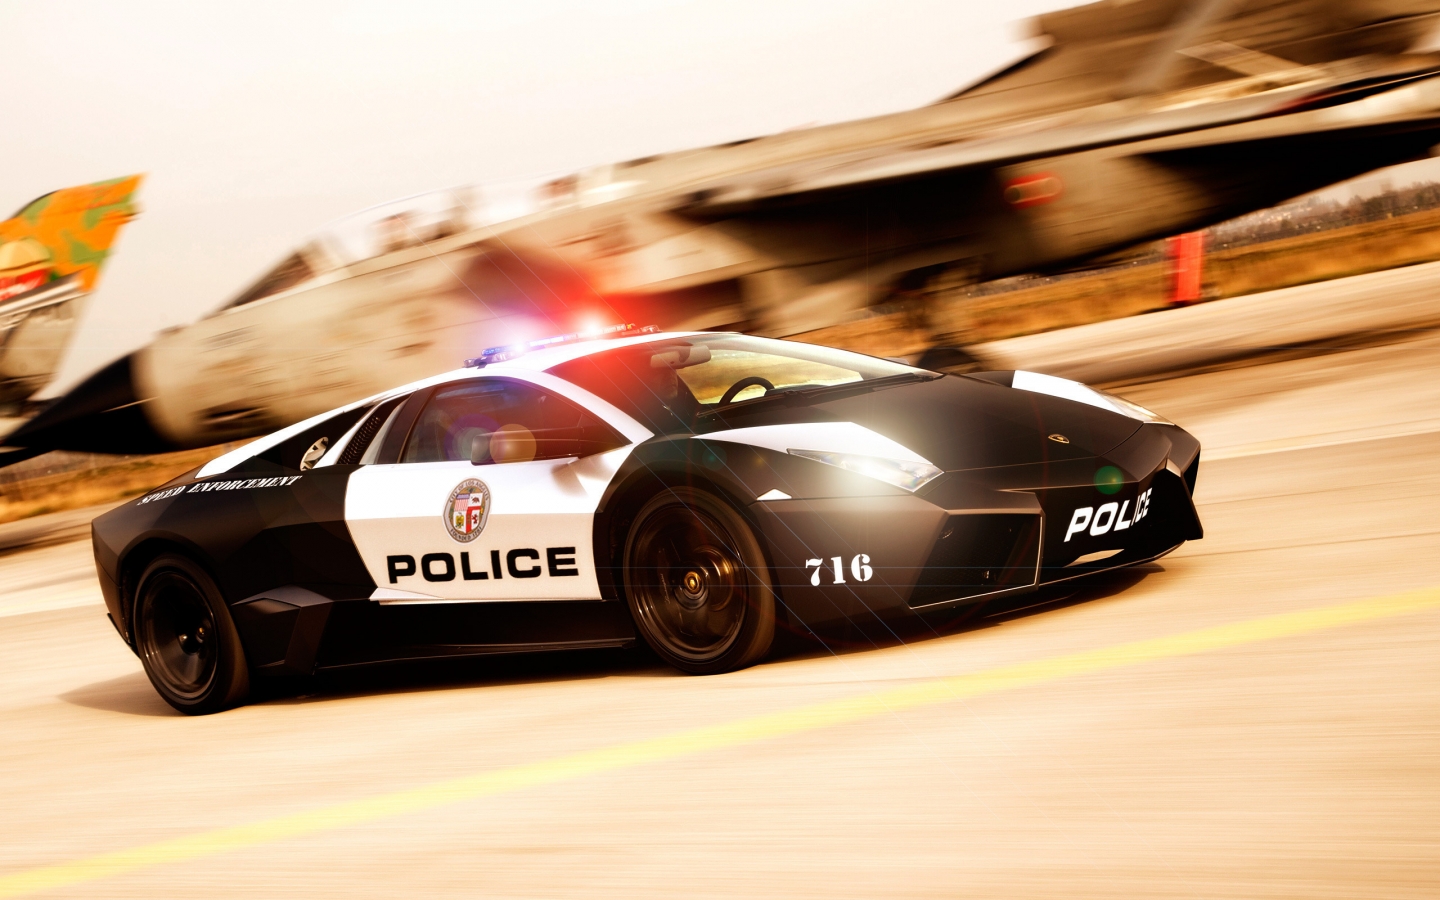 Lamborghini Police Car NFS for 1440 x 900 widescreen resolution